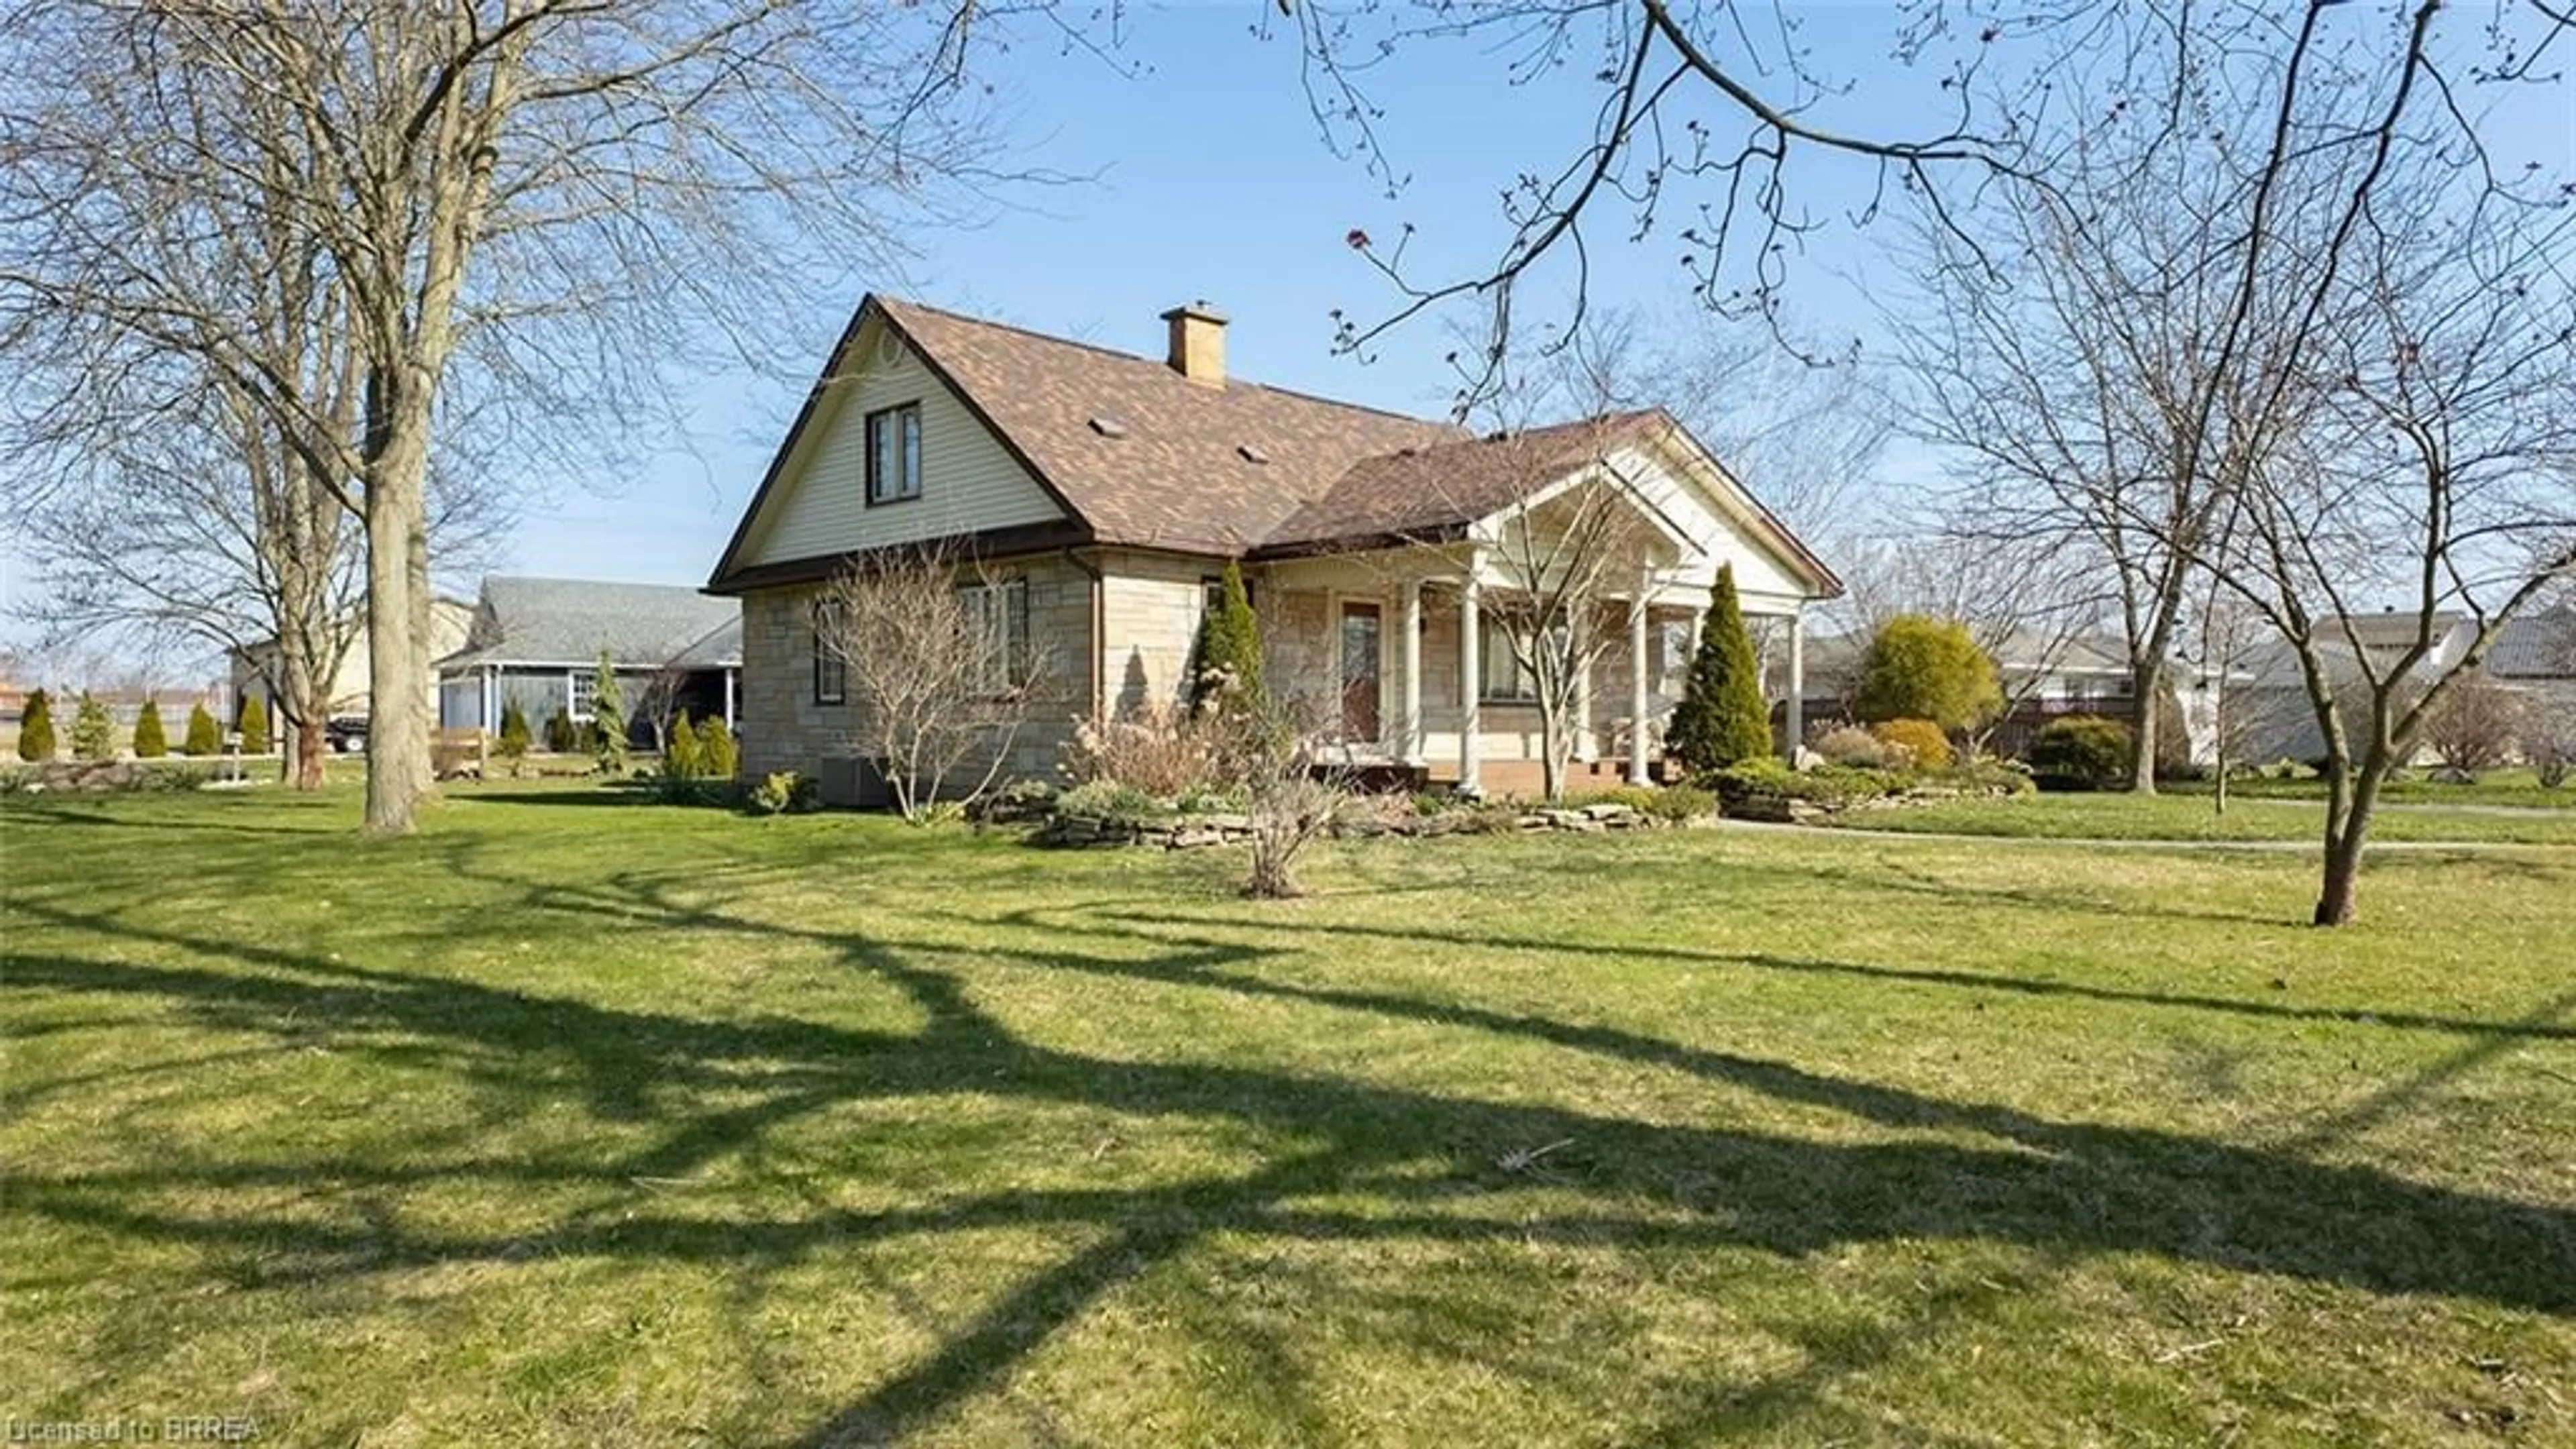 Cottage for 3628 Concession Dr, Glencoe Ontario N0L 1M0